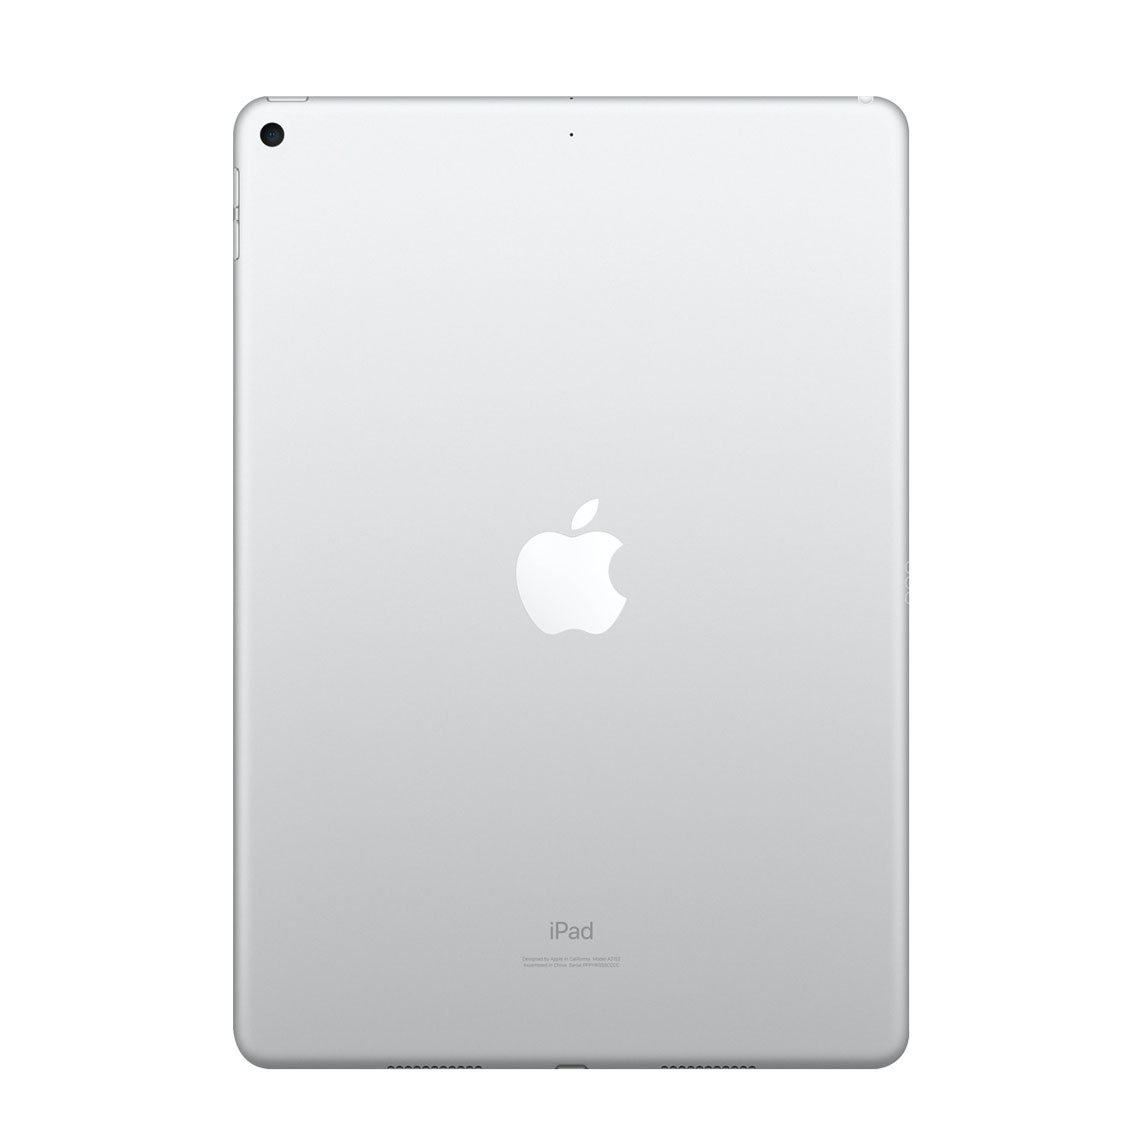 iPad Air - Silver - Wi-Fi